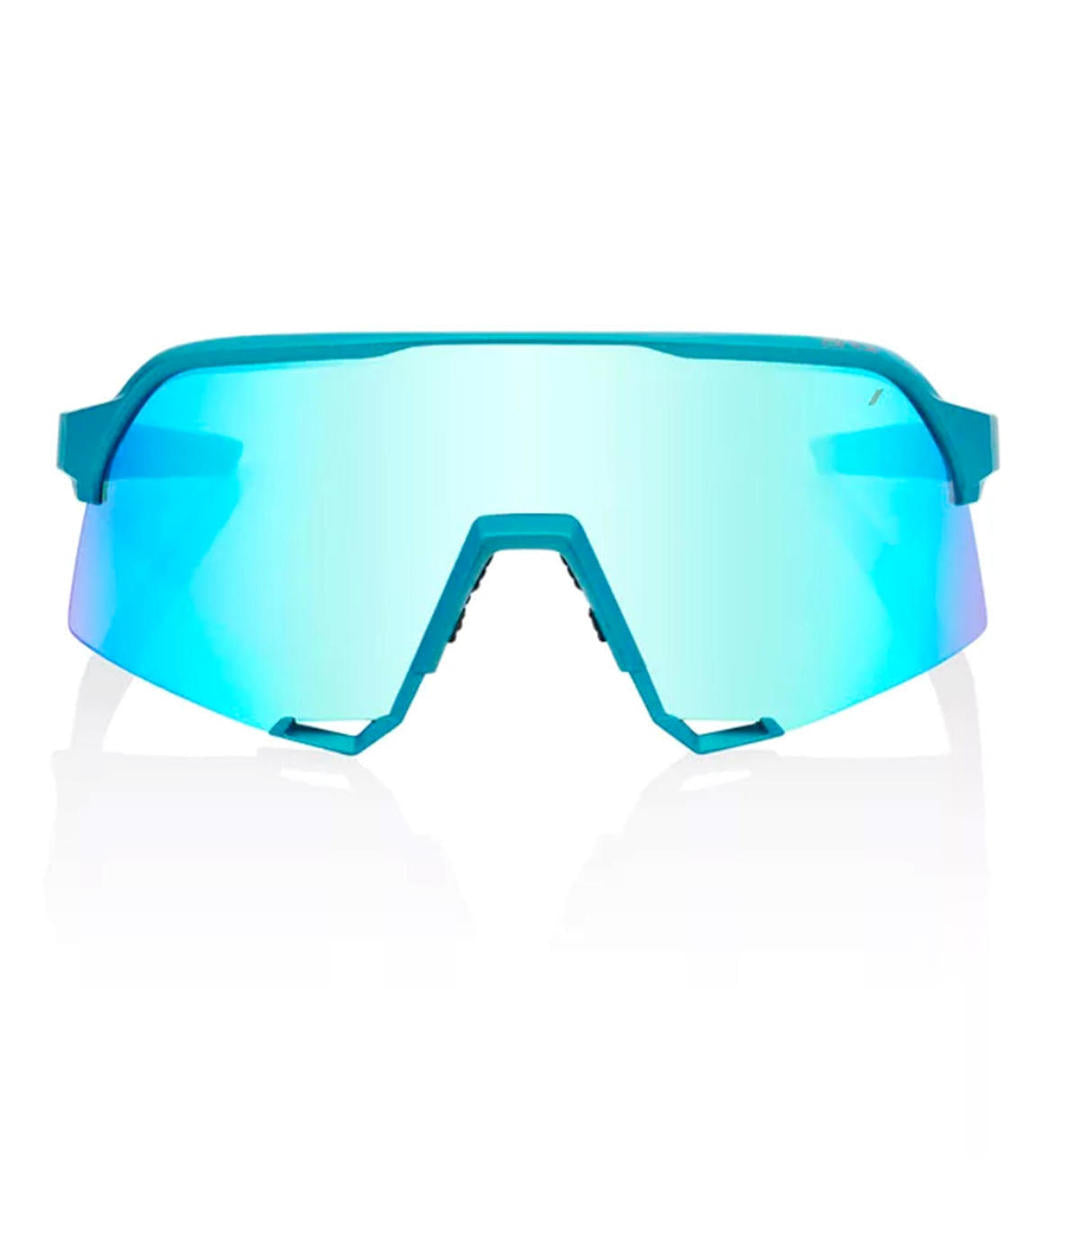 RIDE 100% Gafas de Sol S3 Peter Sagan LE Blue Topaz Multilayer - Azul Topaz